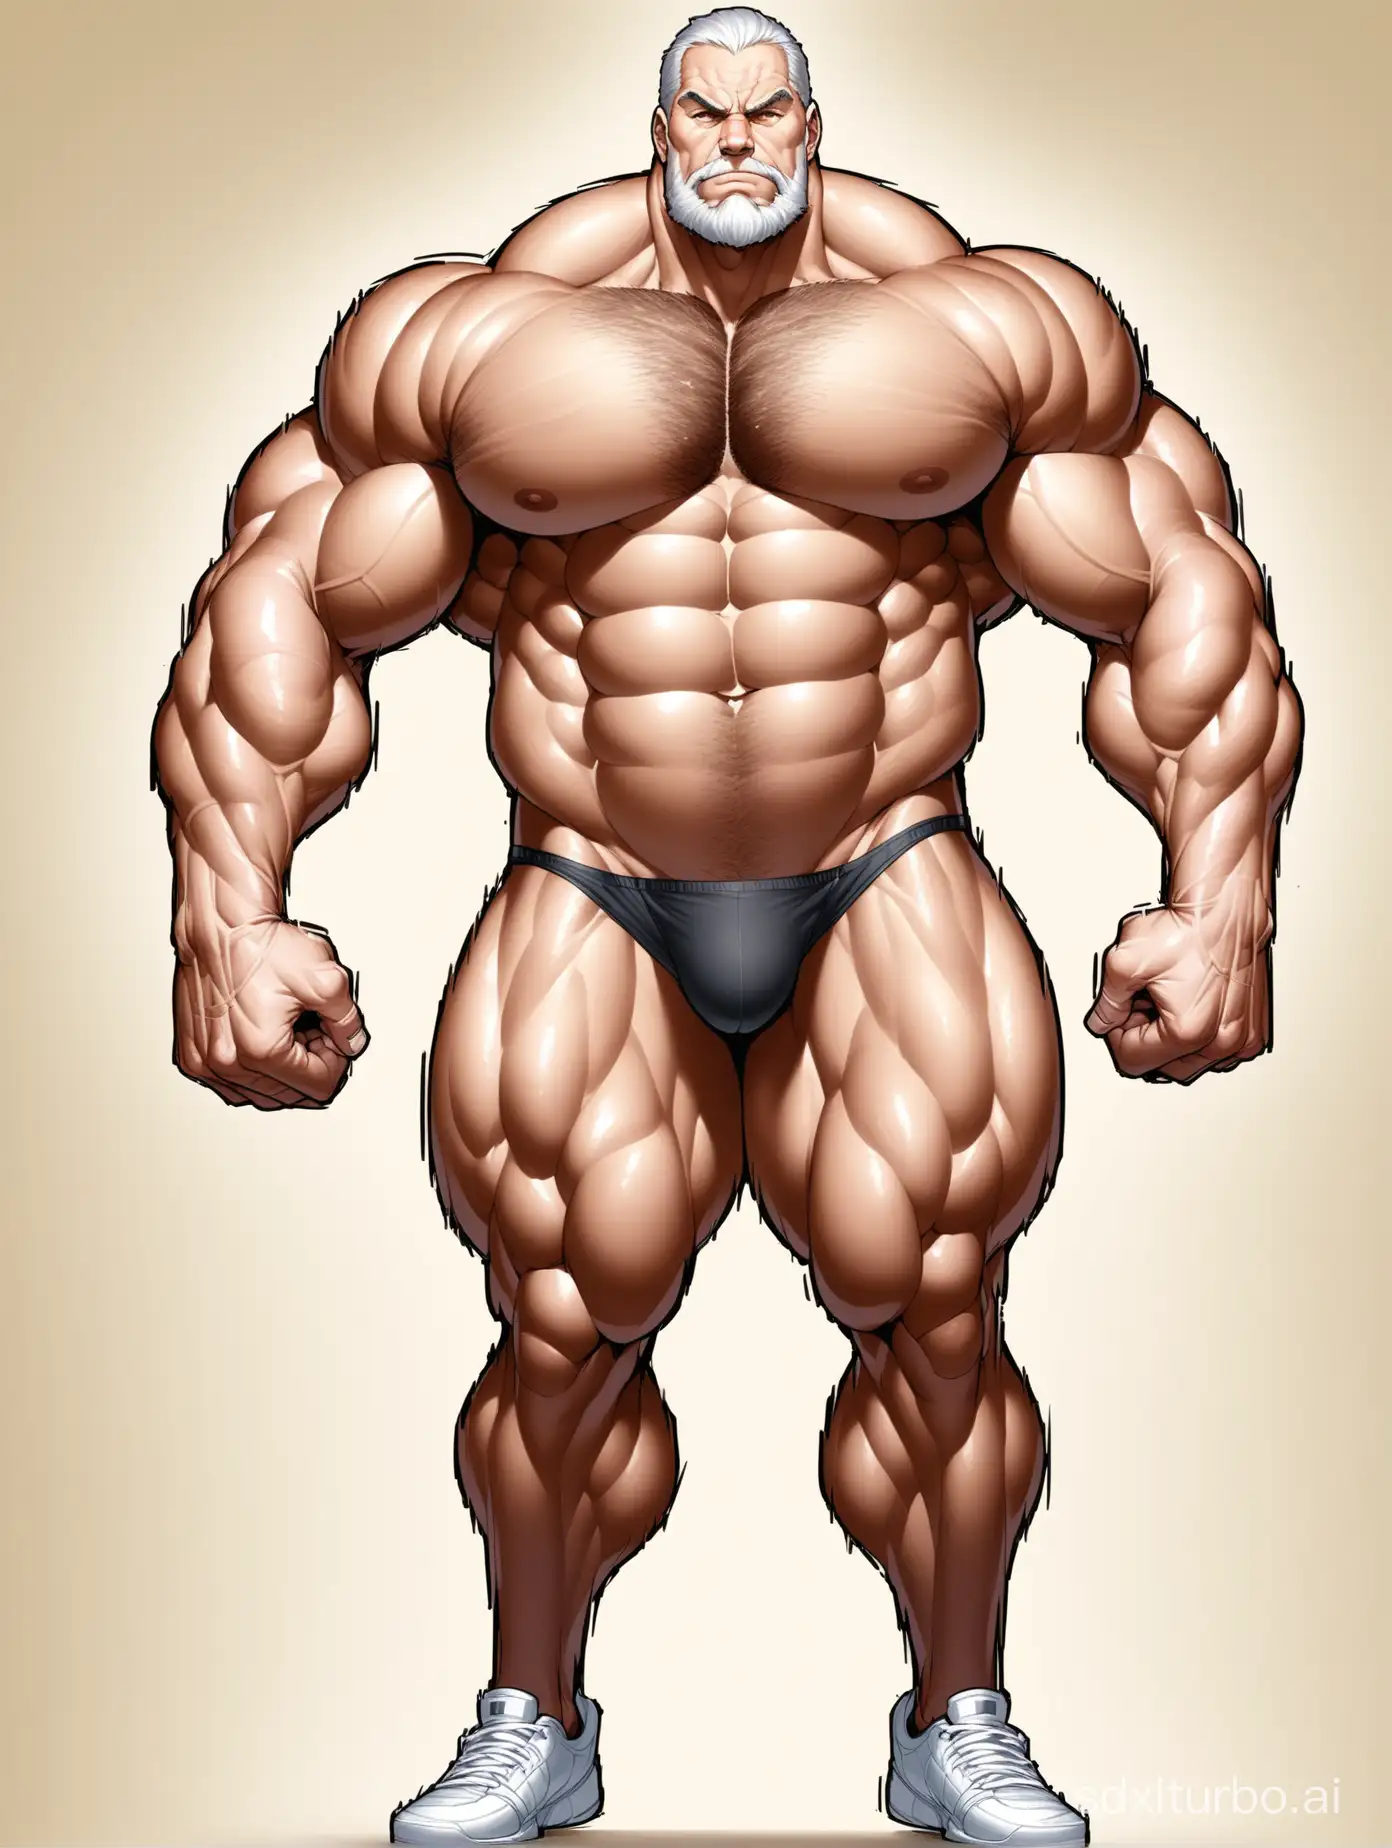 Massive-Muscle-Bodybuilder-Flexing-Biceps-in-White-Underwear